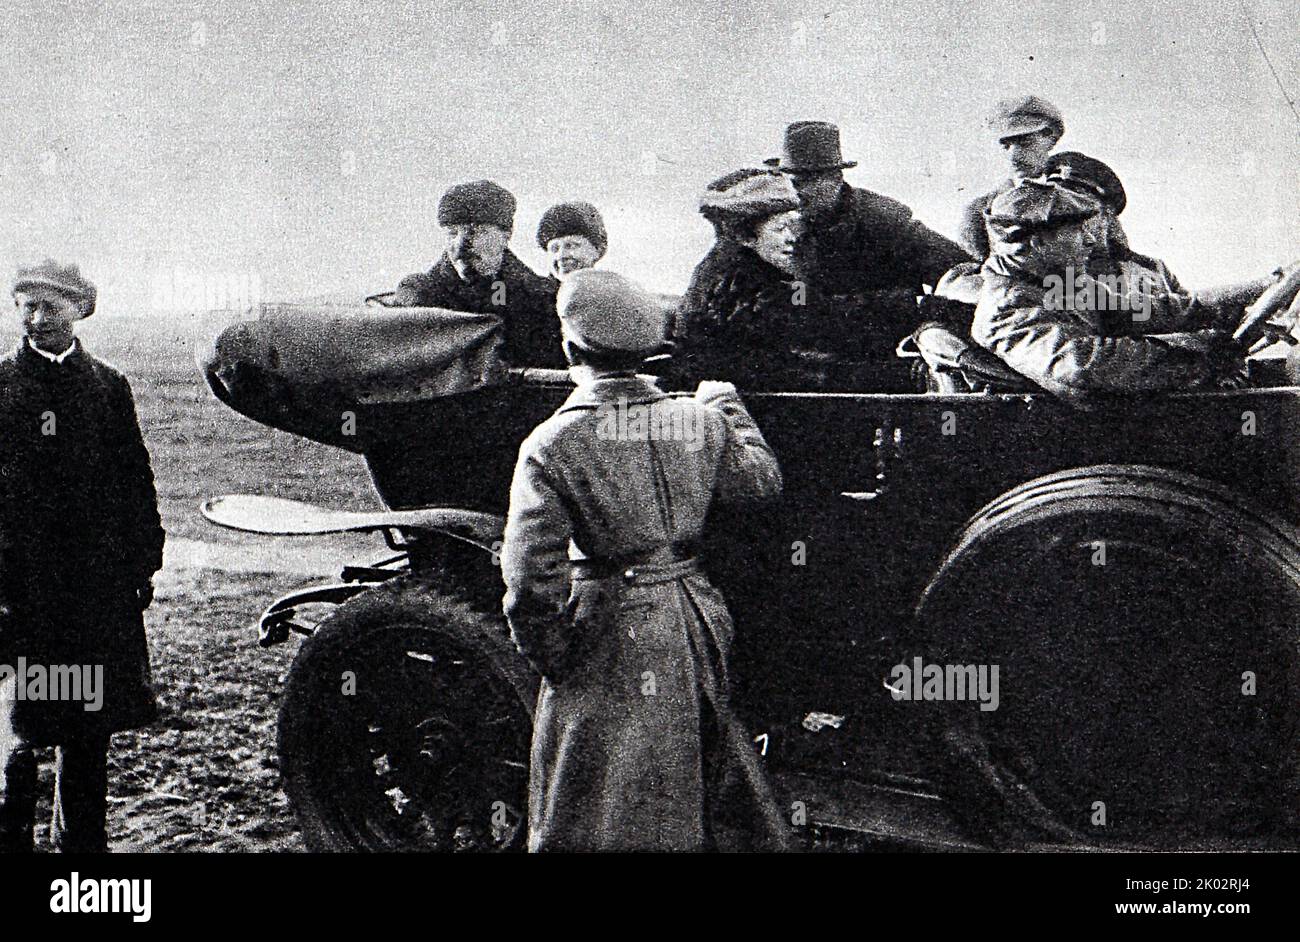 Lenin W. I. , Krupskaja N. K. und Uljanowa M. I. im Auto nach dem Ende der Parade der Einheiten der Roten Armee auf dem Chodynskoje-Feld. 1918, Mai 1. Moskau. Fotograf - P. K. Novitsky Stockfoto